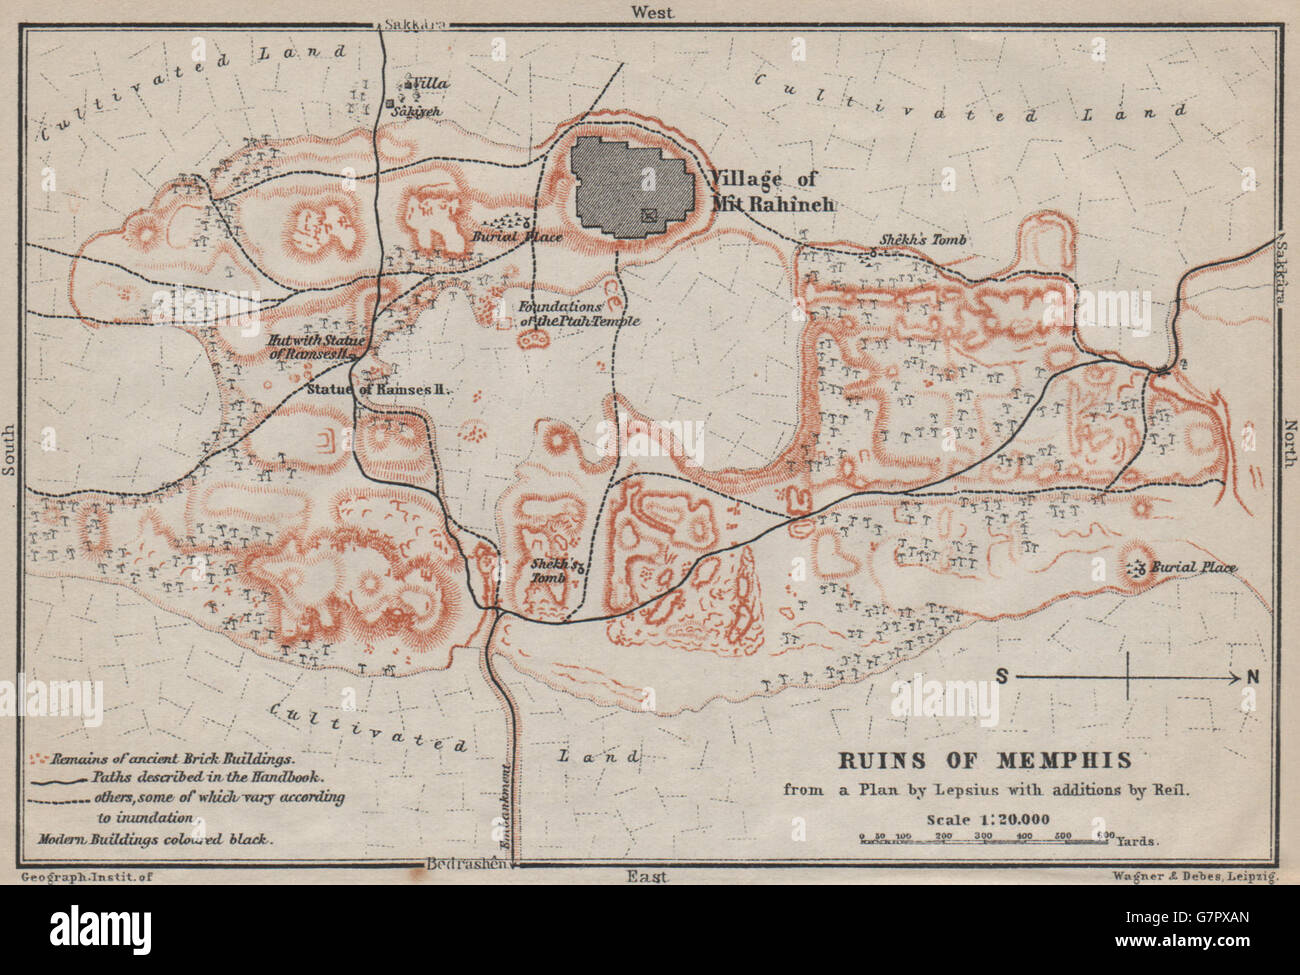 Ruins Of Memphis Ground Plan Mit Rahina Egypt Baedeker 1914 Antique G7PXAN 